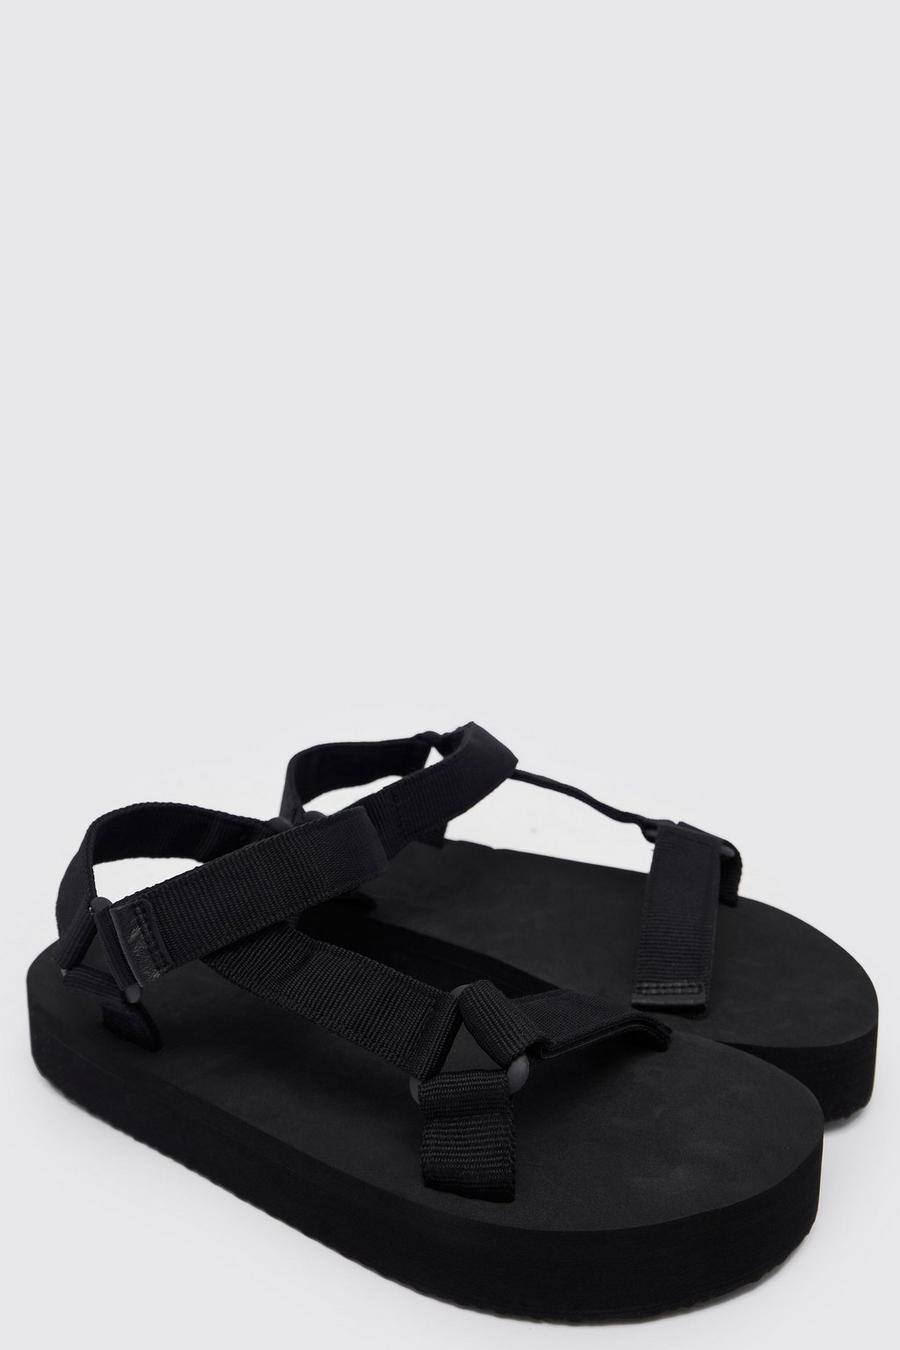 Black schwarz Technical Sandal